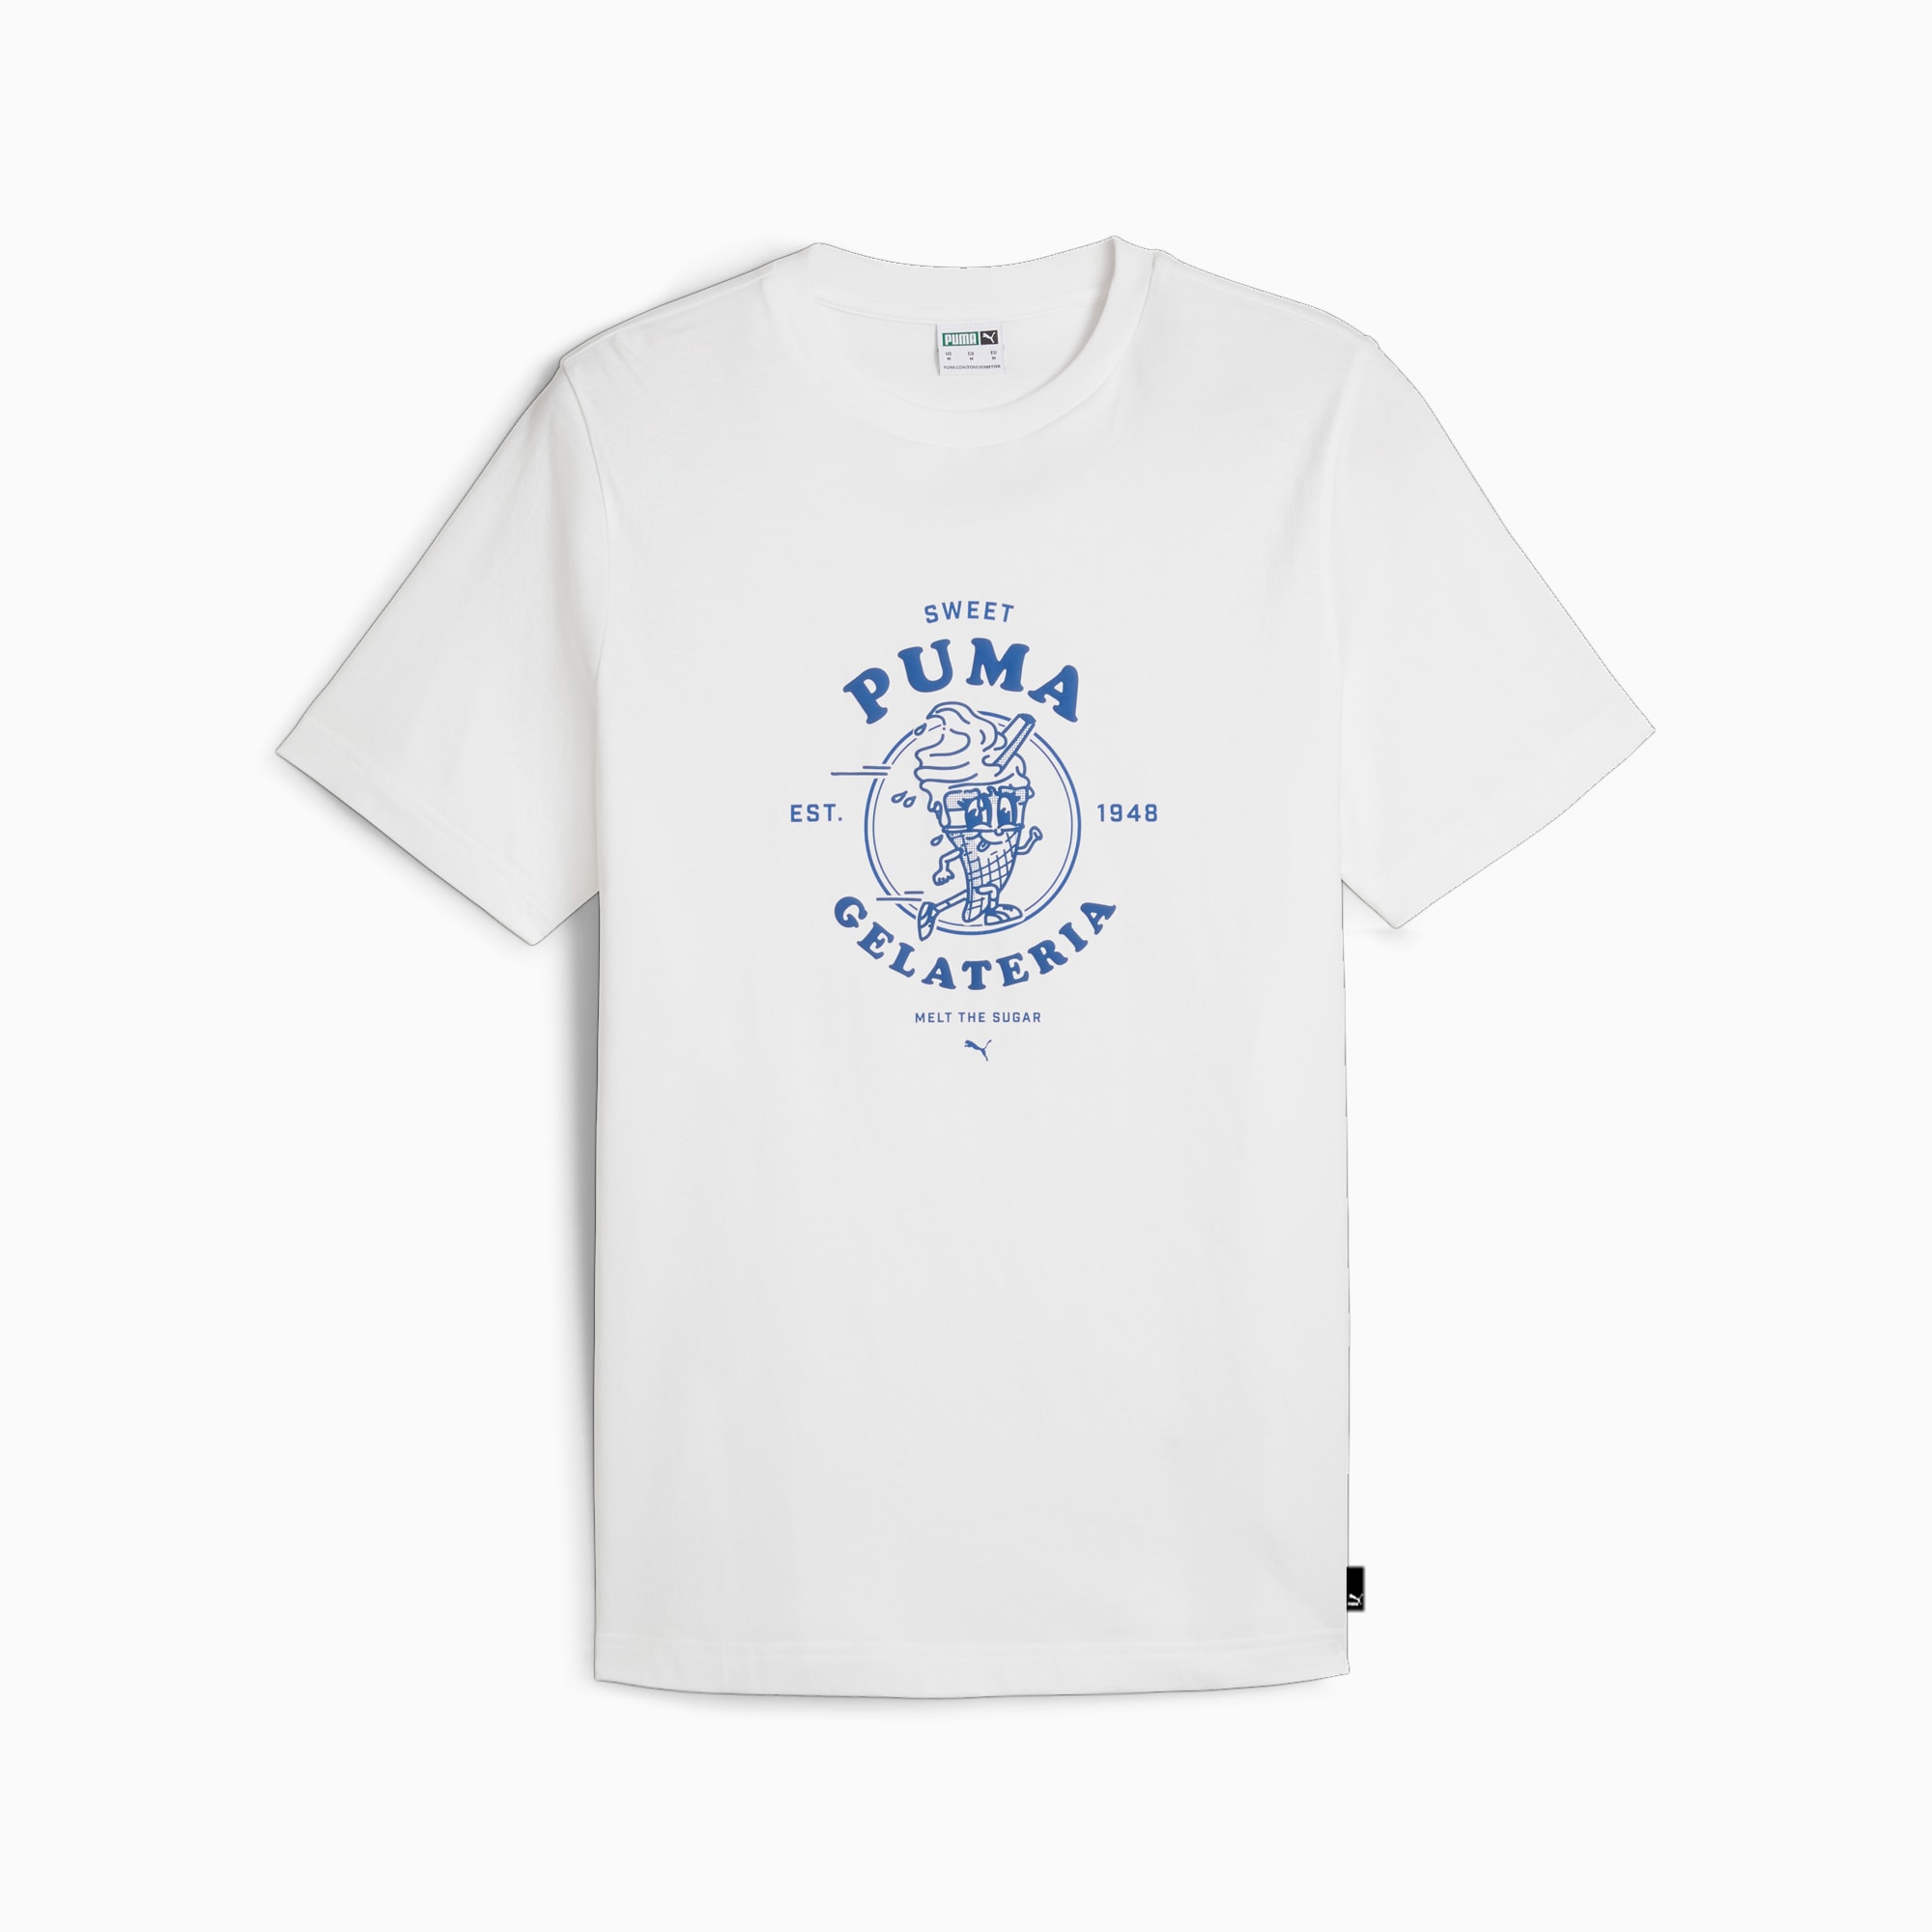 Graphics PUMA Gelateria Men's T-Shirt, White, Size M, Clothing